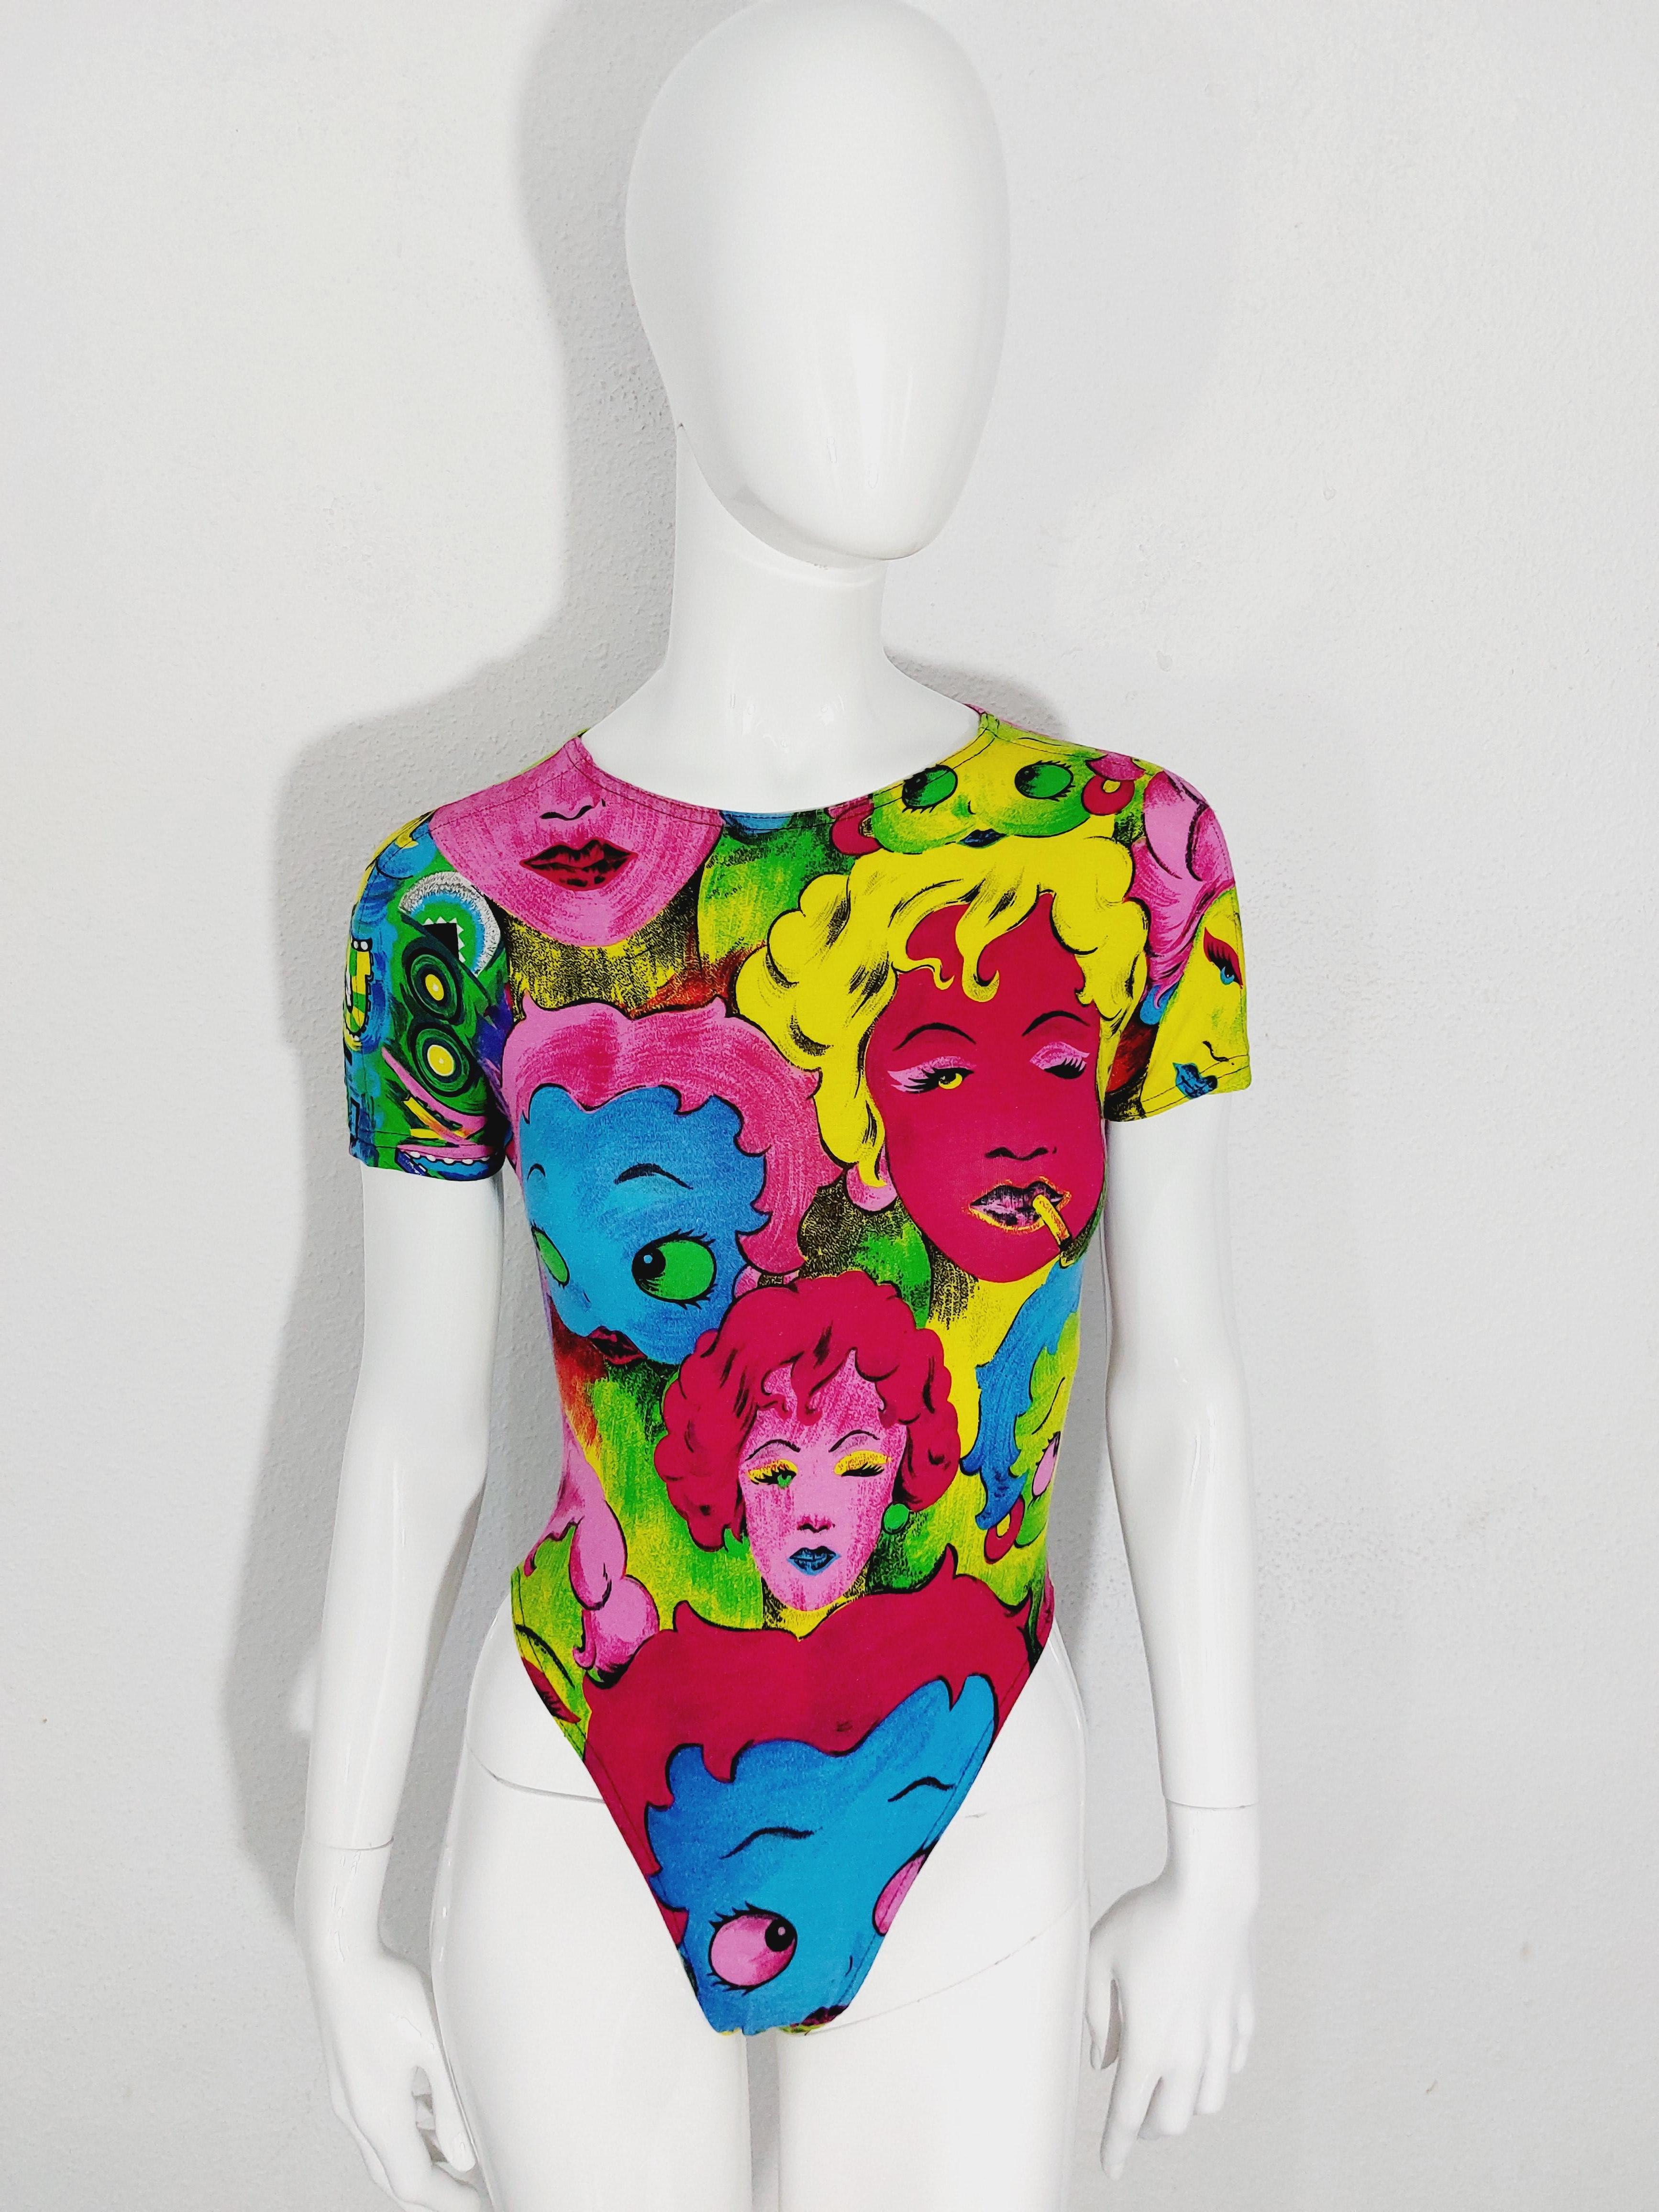 GIANNI VERSACE Andy Warhol Pop Art Marilyn Monroe Betty Boop SS91 Bodyuit Body For Sale 8